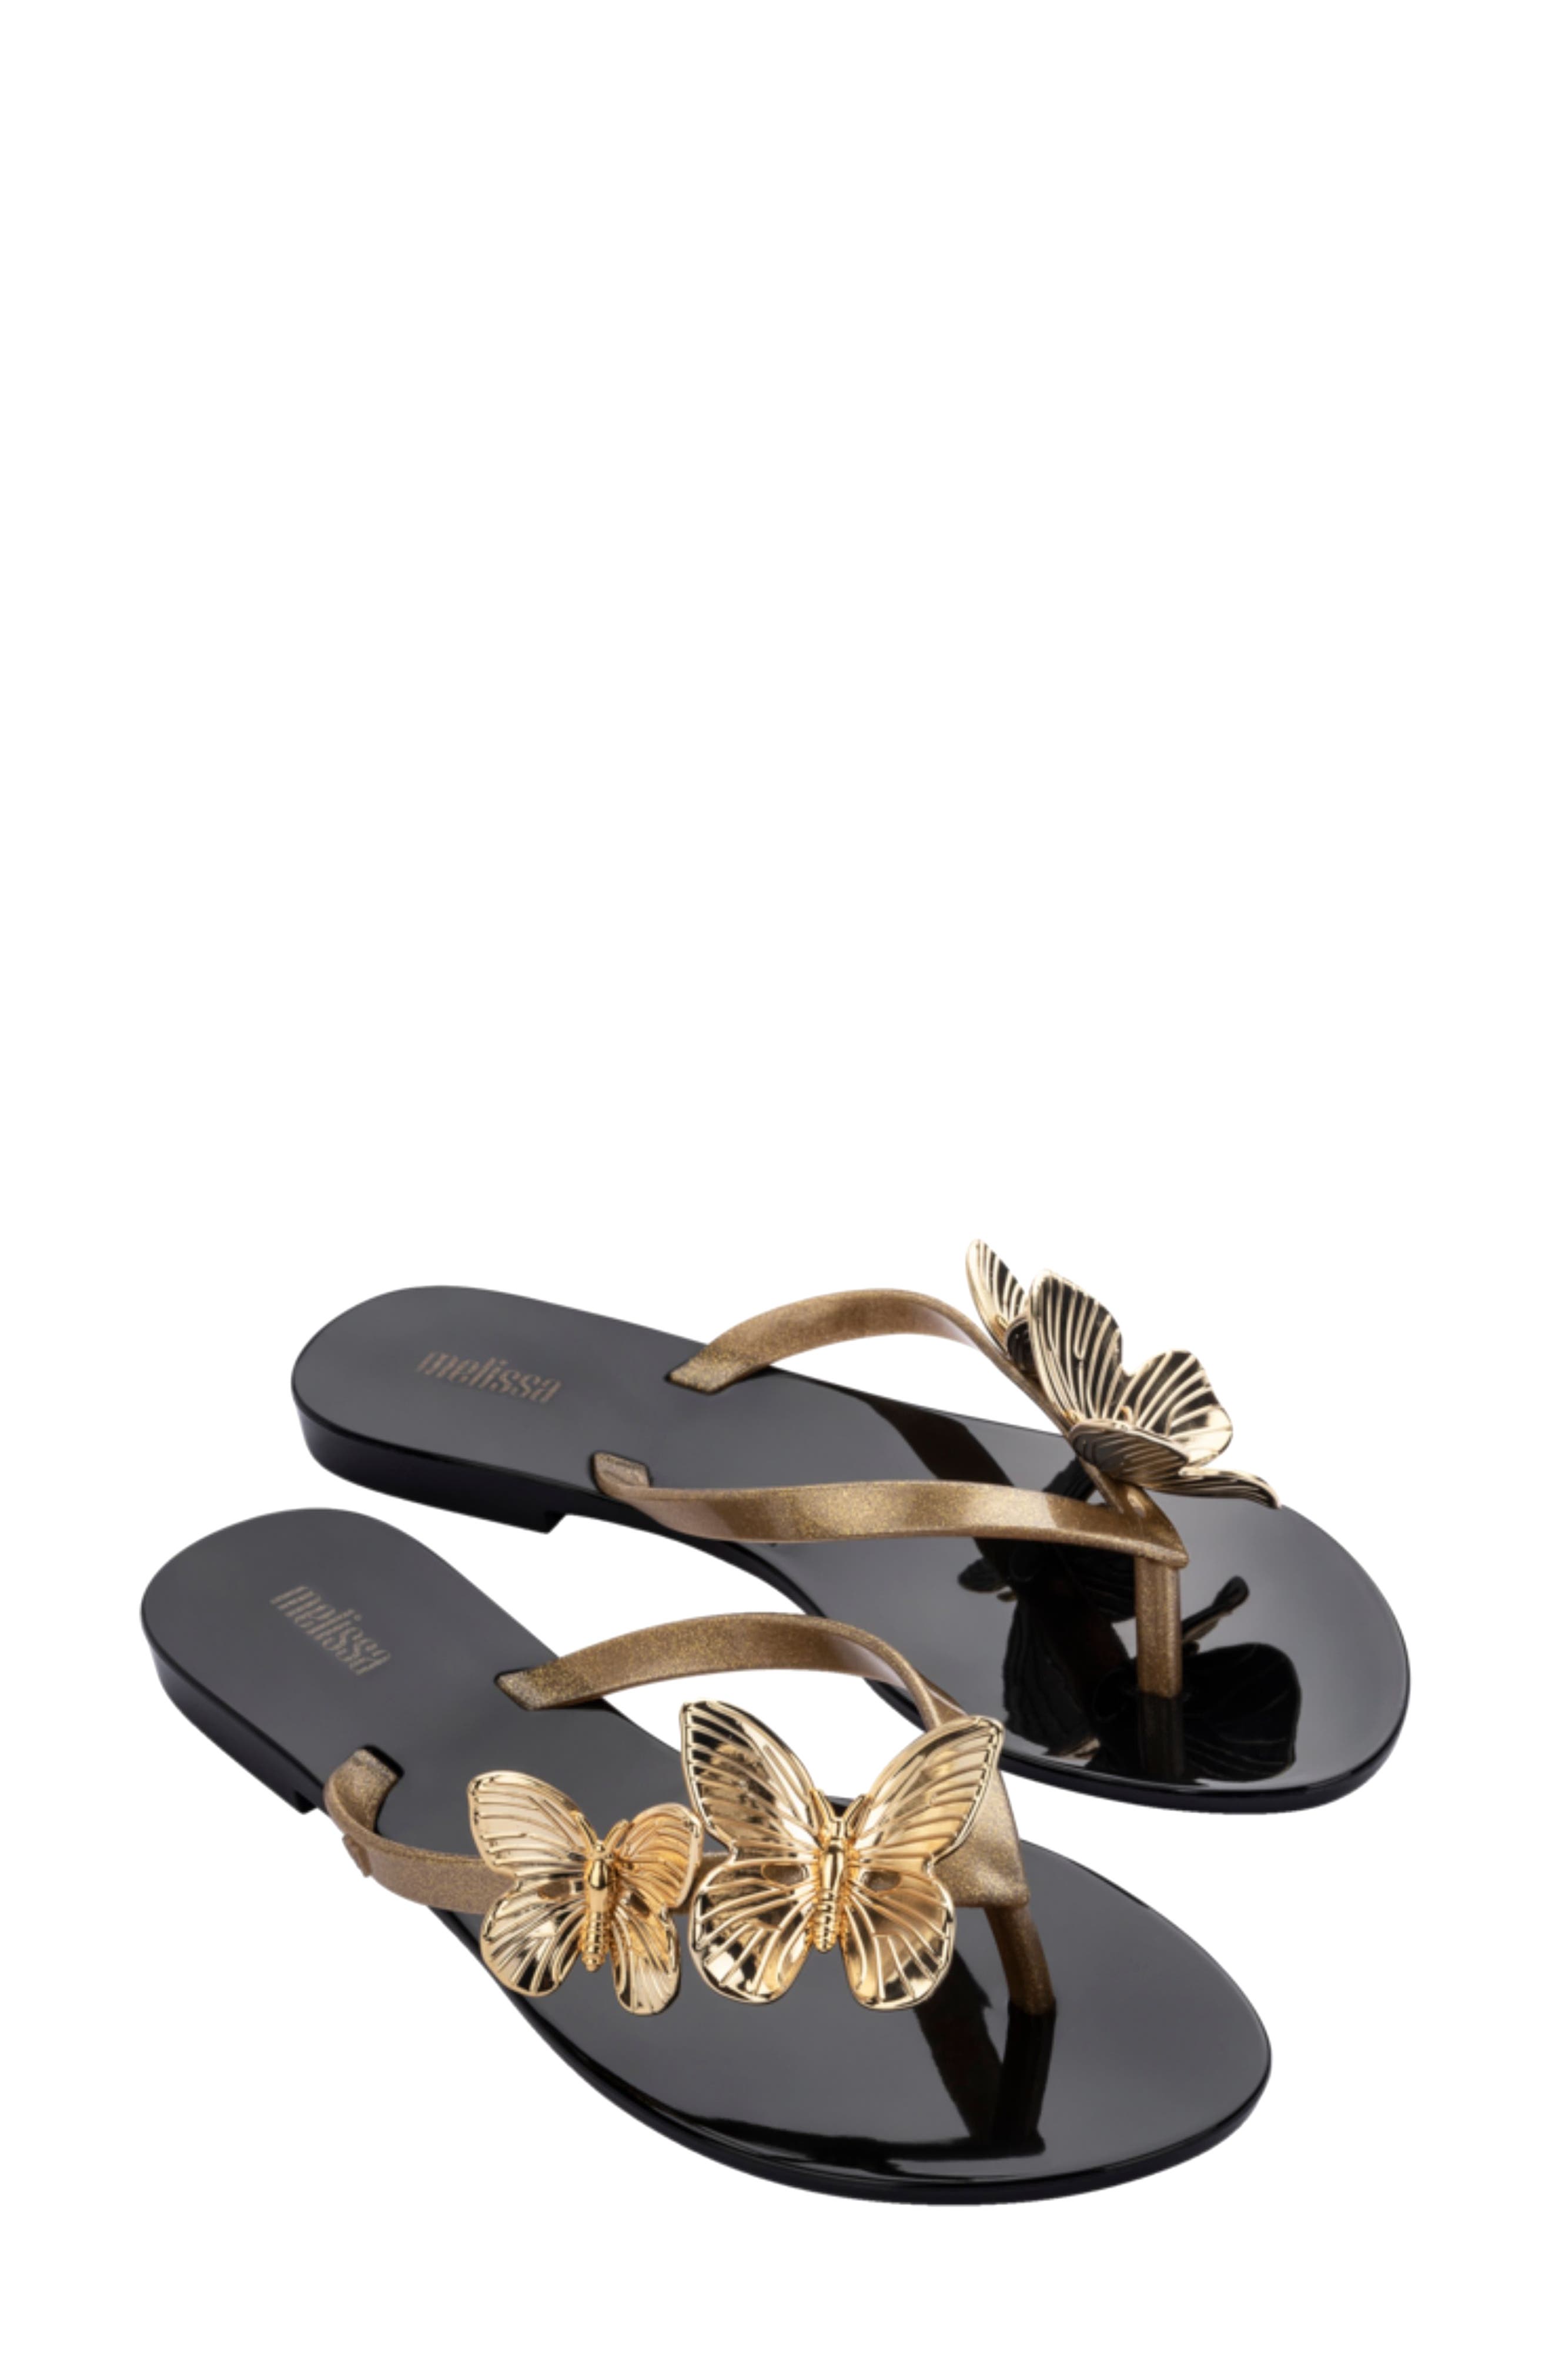 Shoes Sandals Flip-Flop Sandals Zara Flip-Flop Sandals gold-colored elegant 